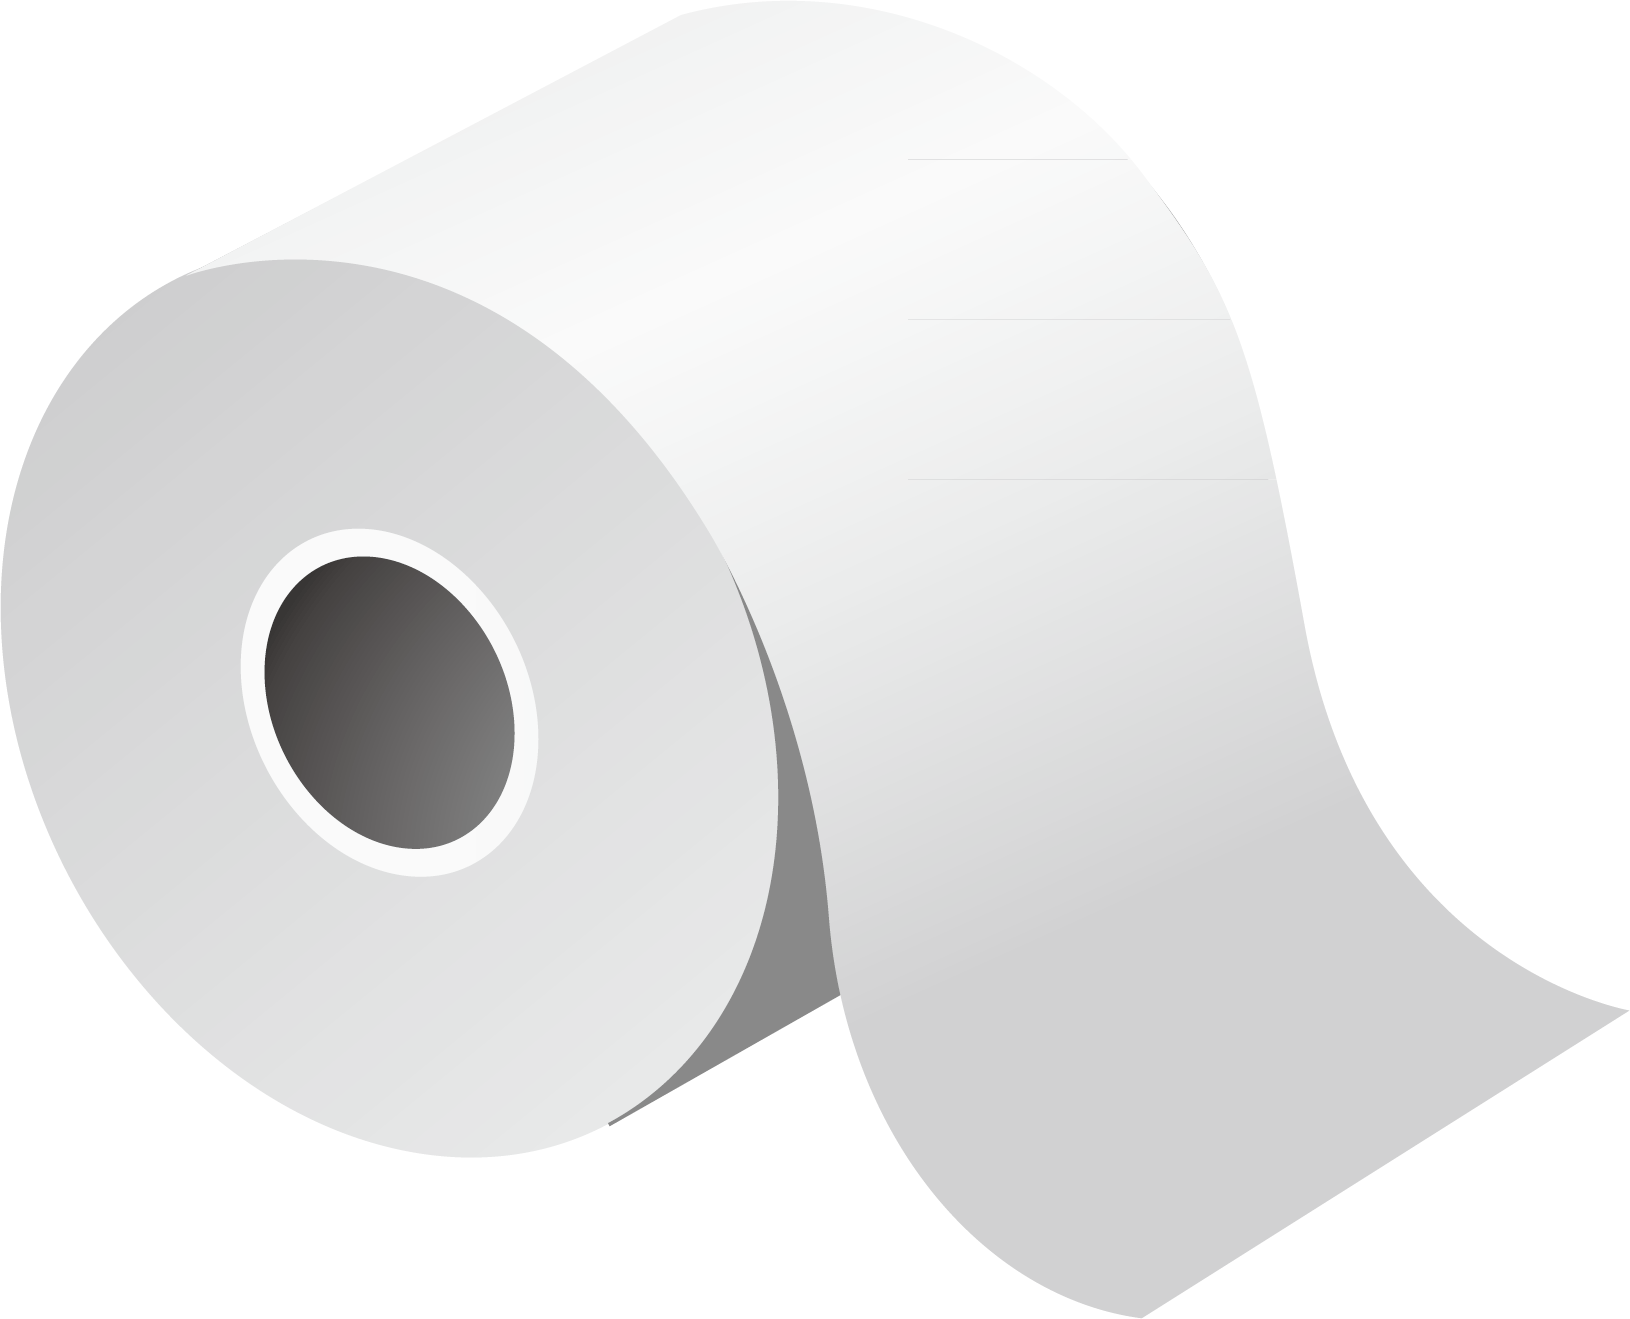 Cartoon Toilet Paper Images - cartoon toilet